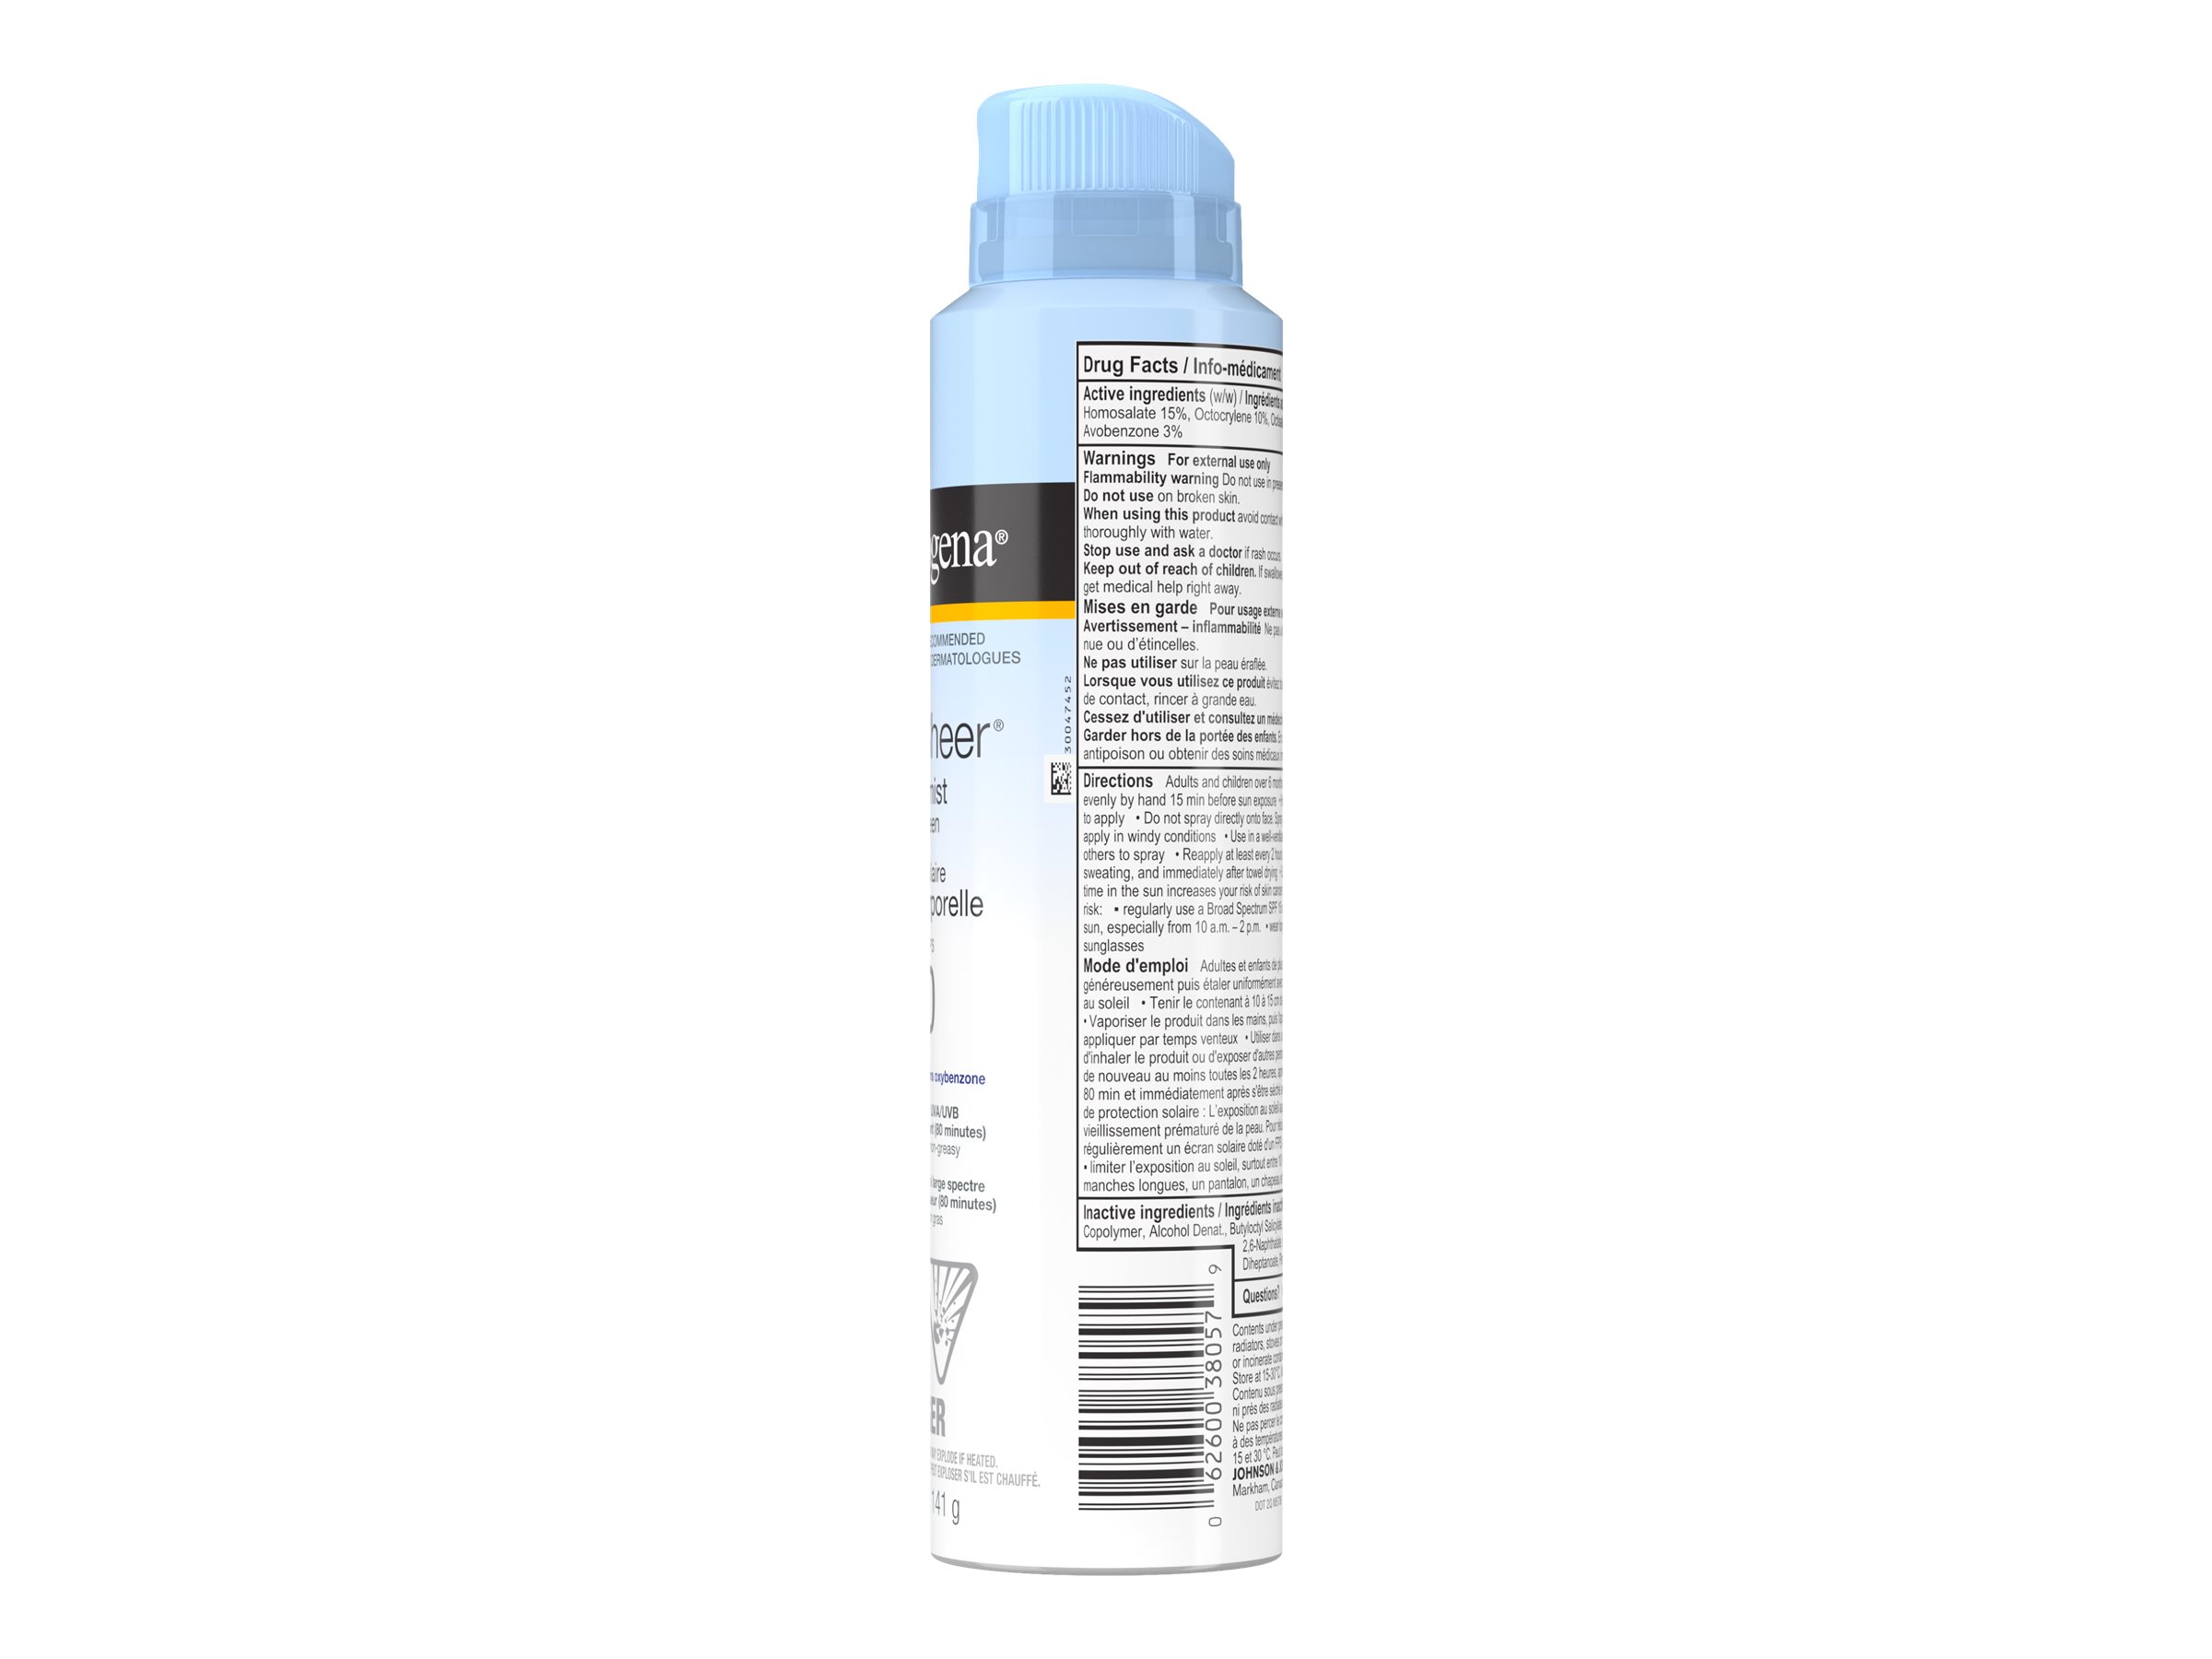 Neutrogena Ultra Sheer Body Mist Sunscreen - SPF 60 - 141g